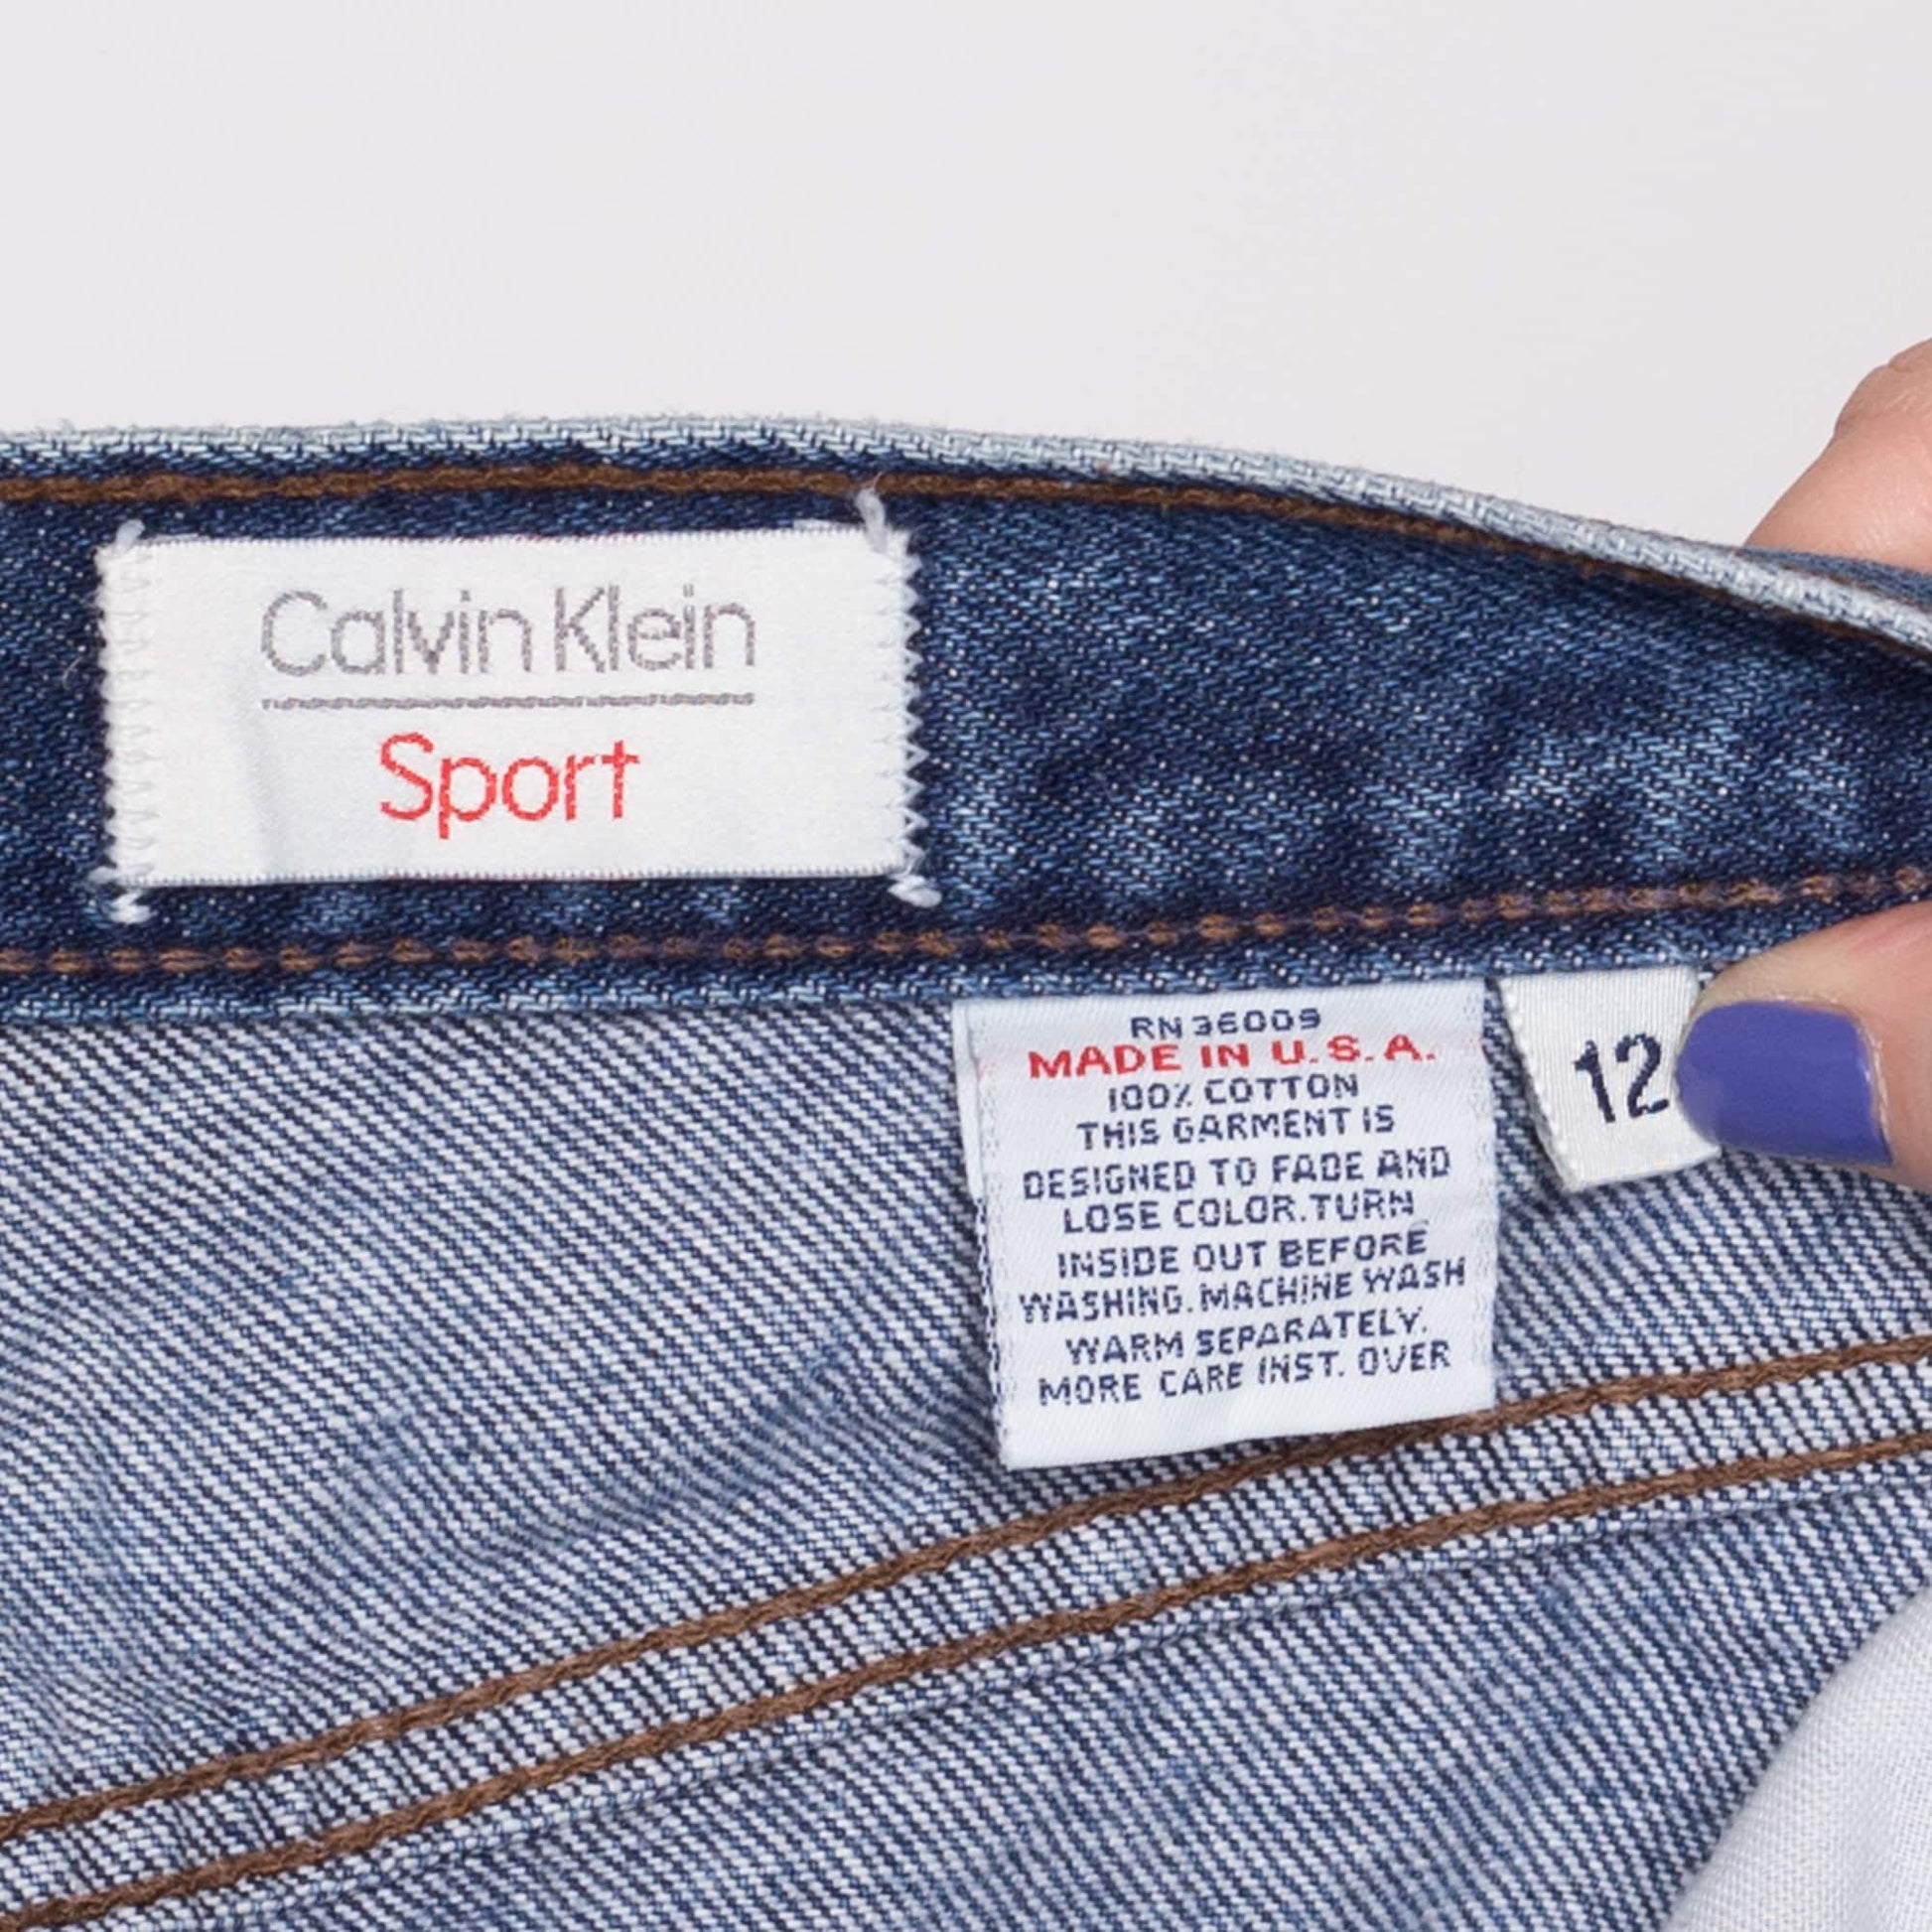 Vintage Calvin Klein Jeans CK Sweatshirt Large Made in USA